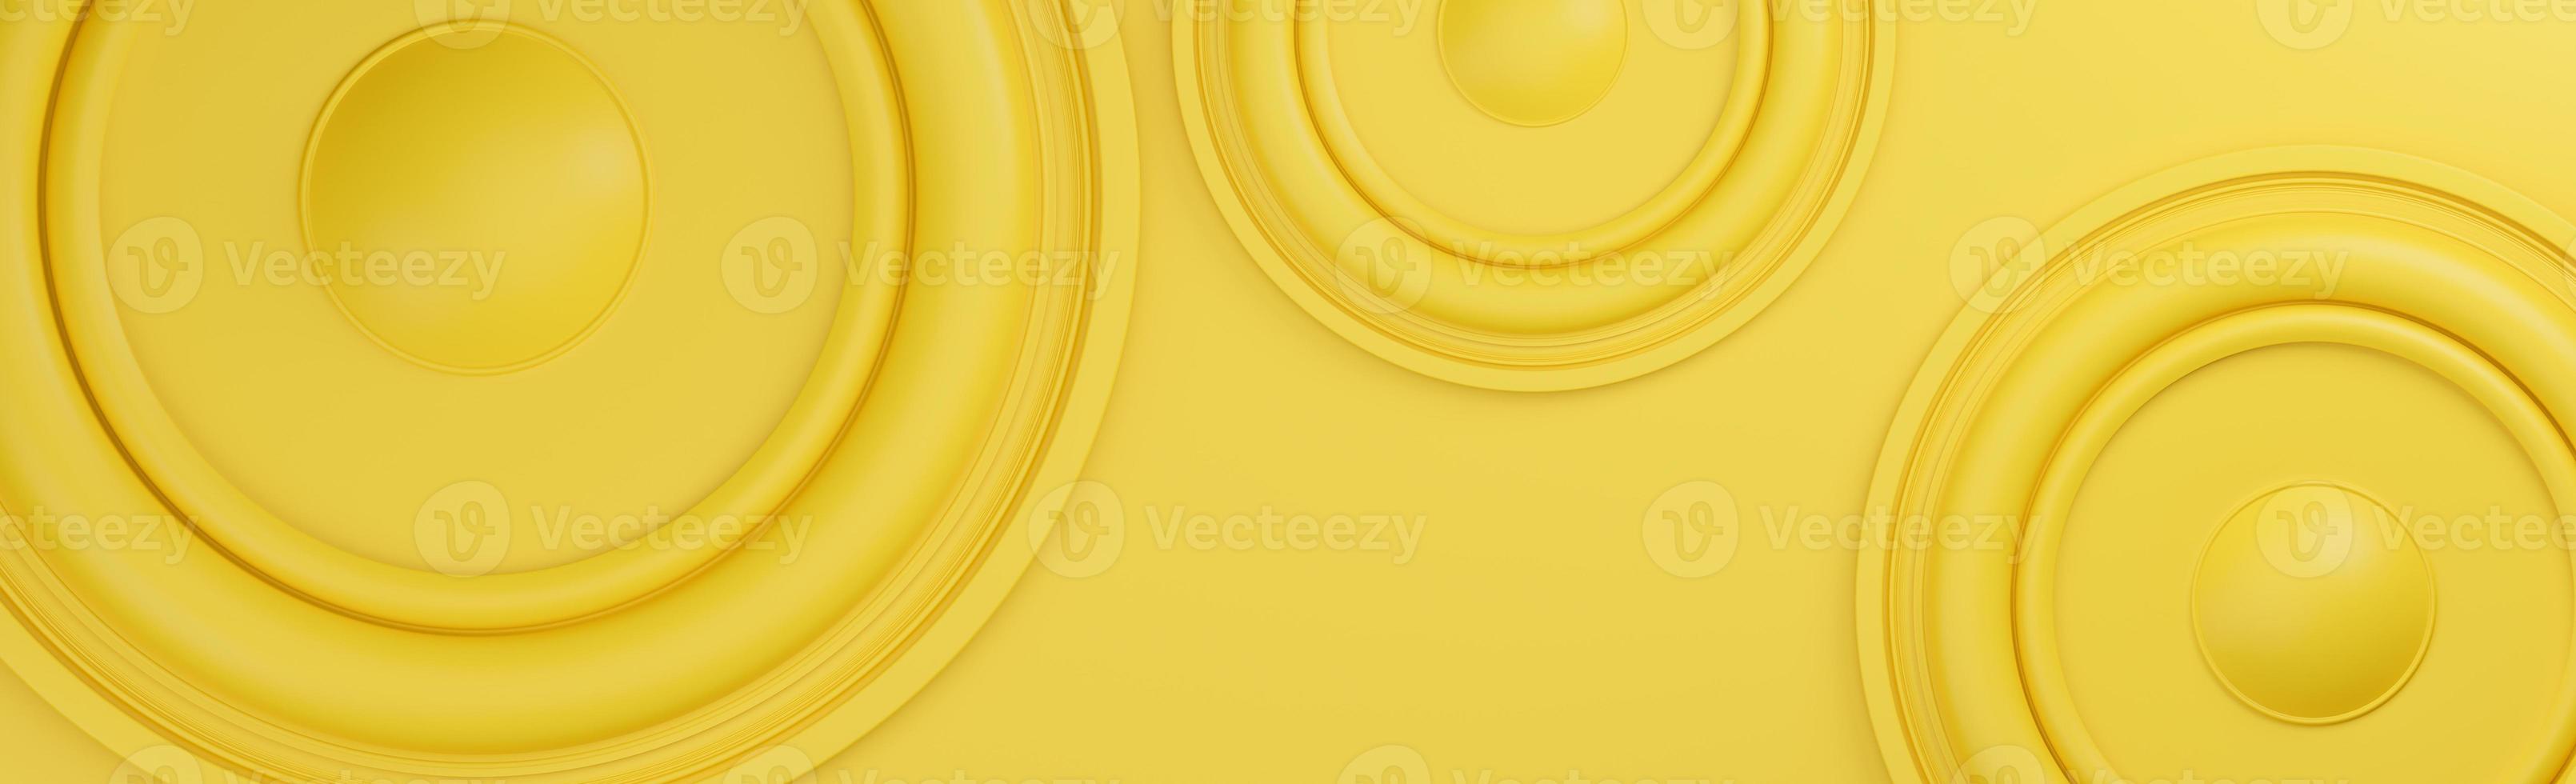 veel gele luidsprekerluidspreker op gele achtergrond., 3D-model en illustratie. foto